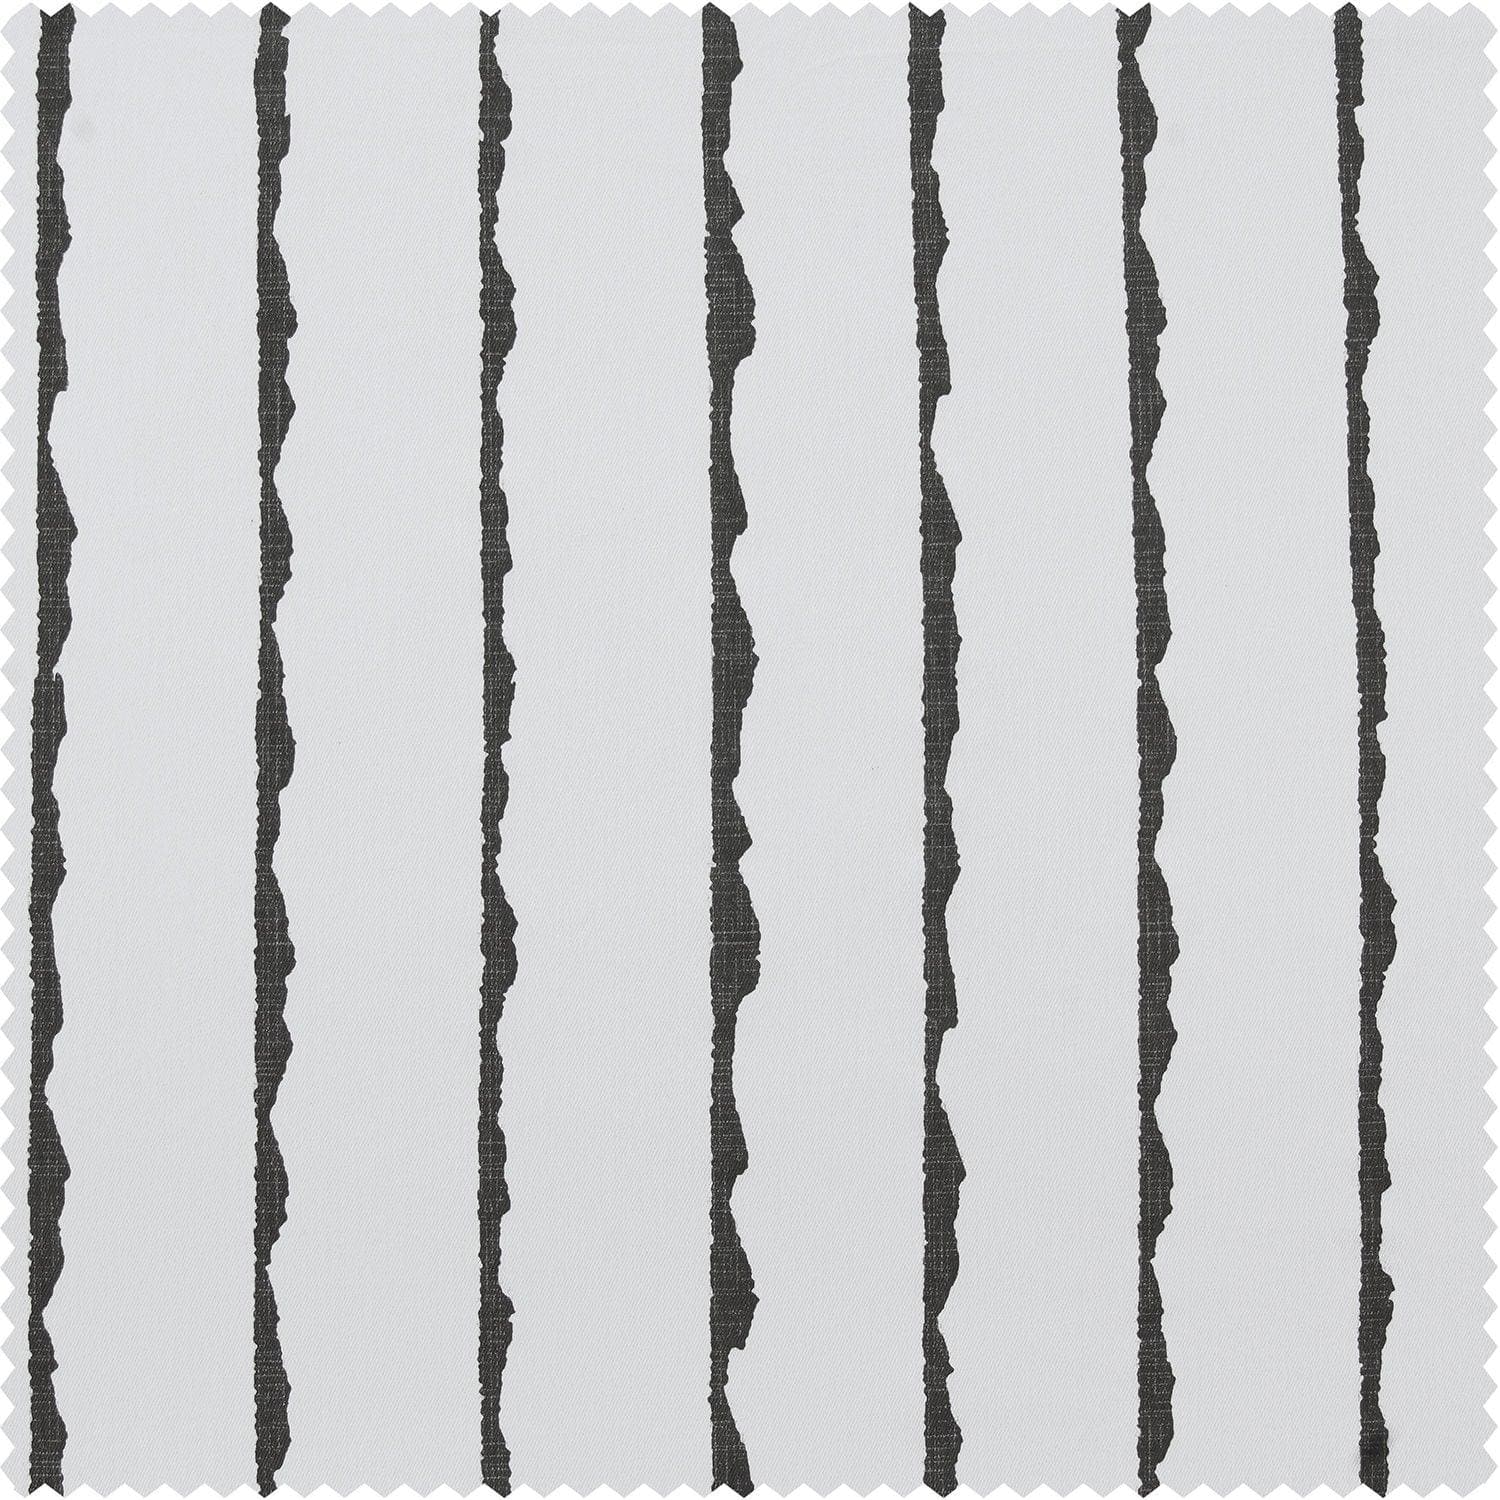 Sharkskin Black Striped Printed Cotton Room Darkening Curtain